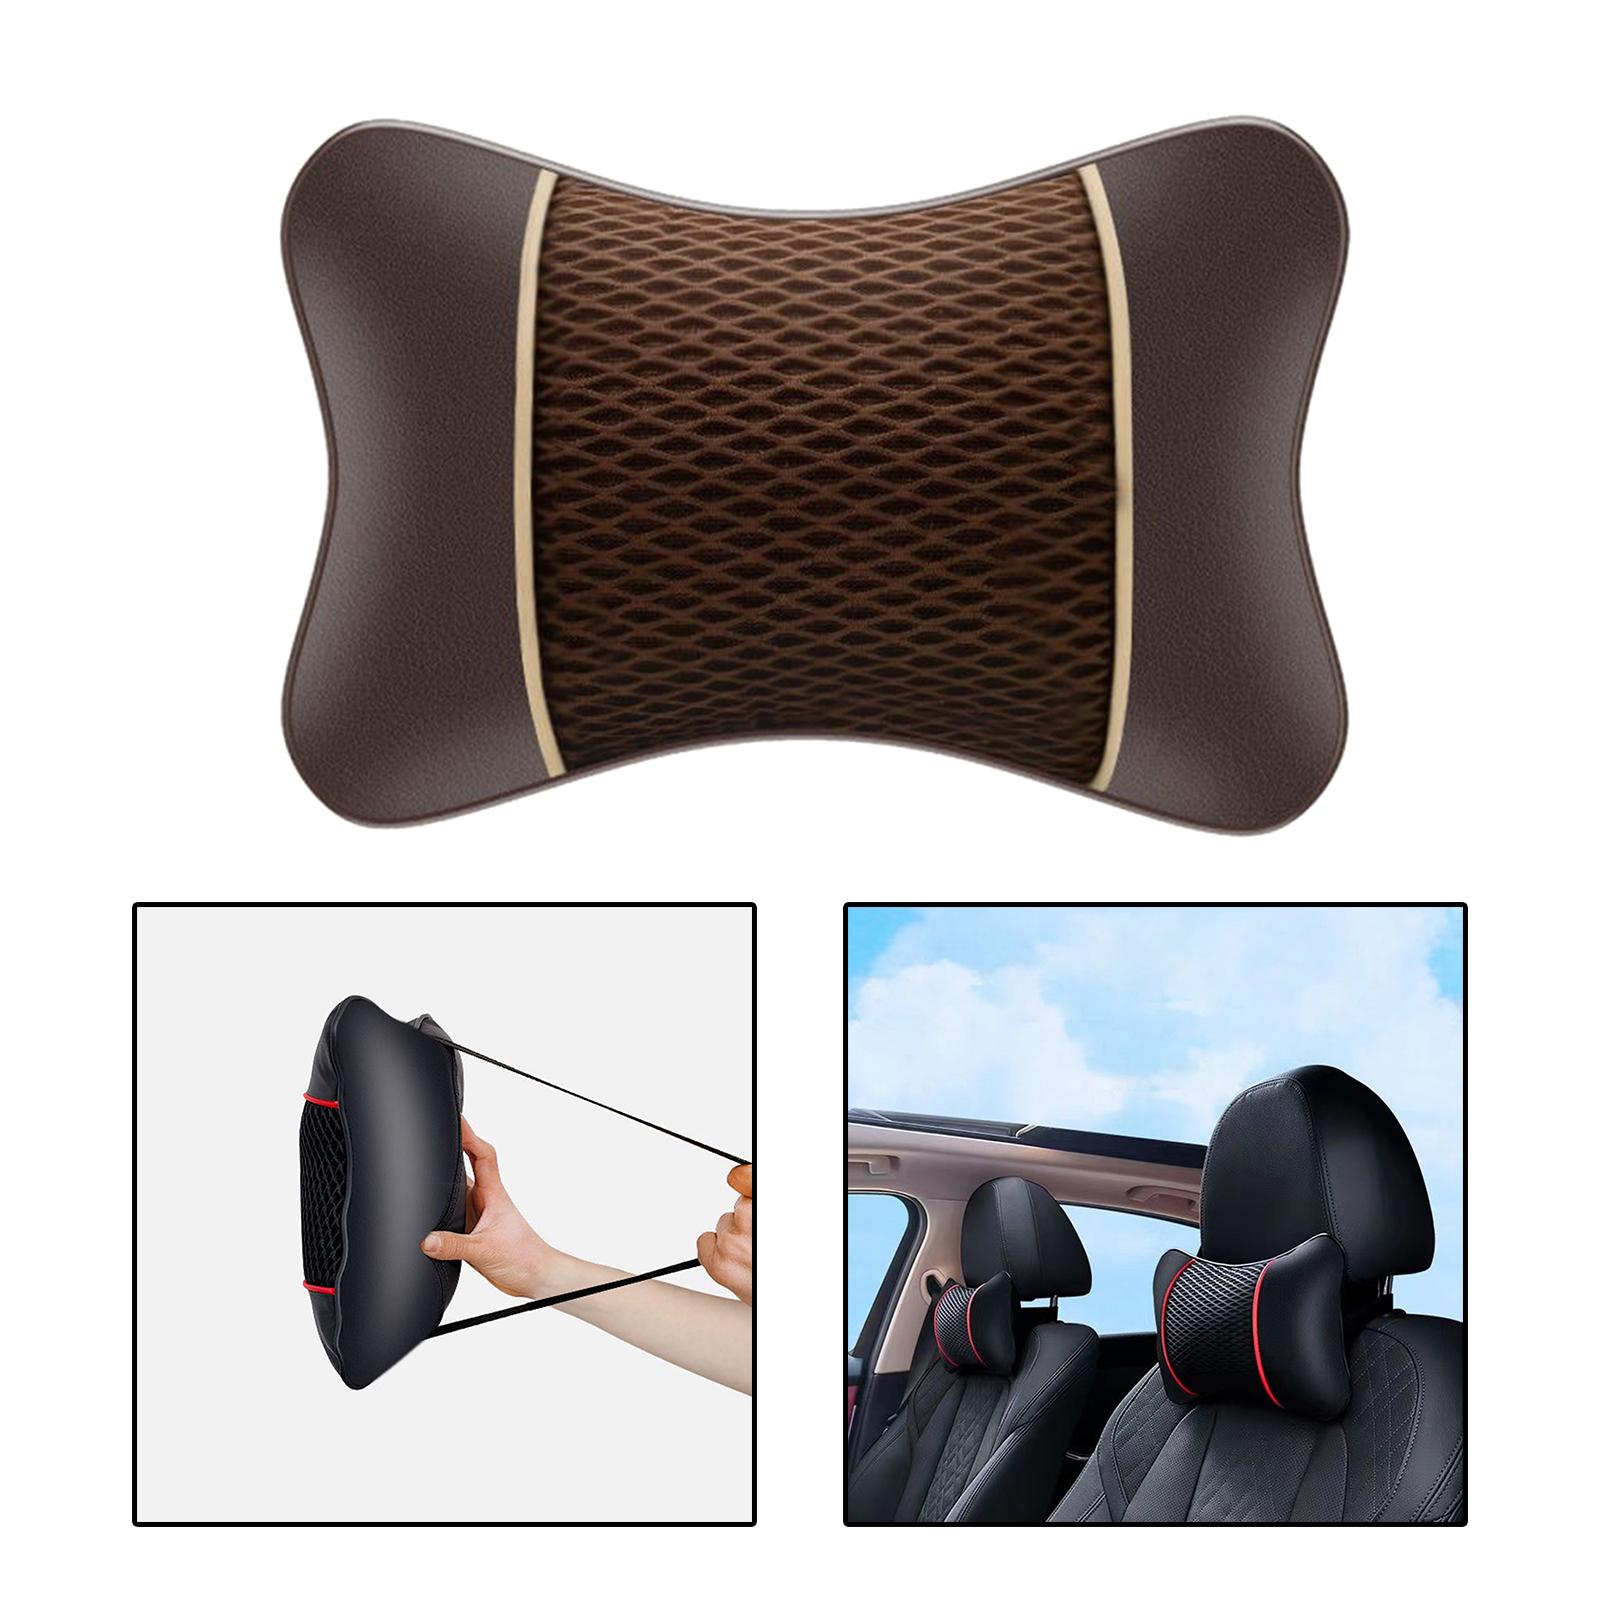 Car Headrest Pillow Ergonomic Car Neck Pillow for Trucks Suvs Cars Brown